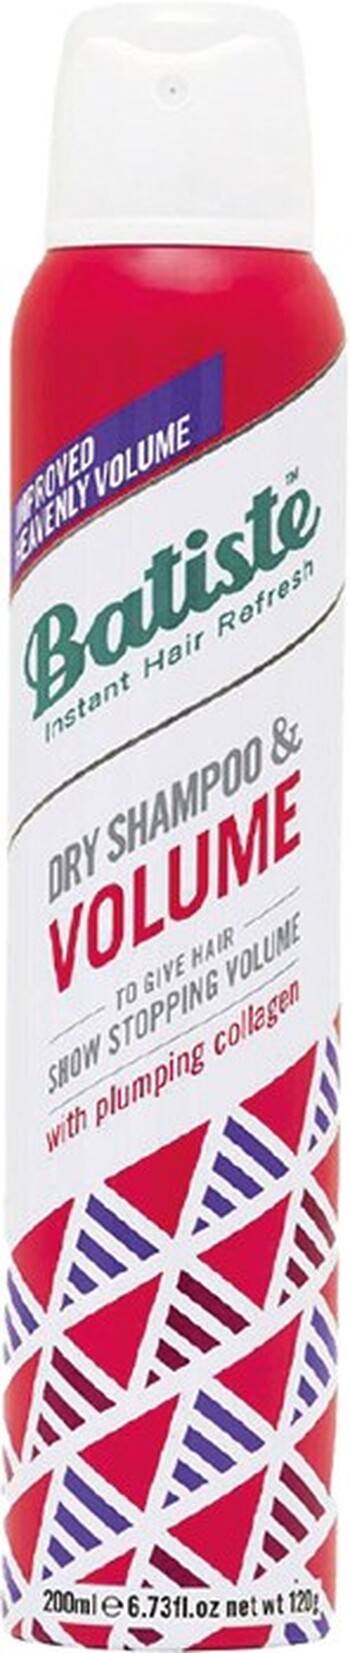 Batiste Dry Shampoo Volume 200ml